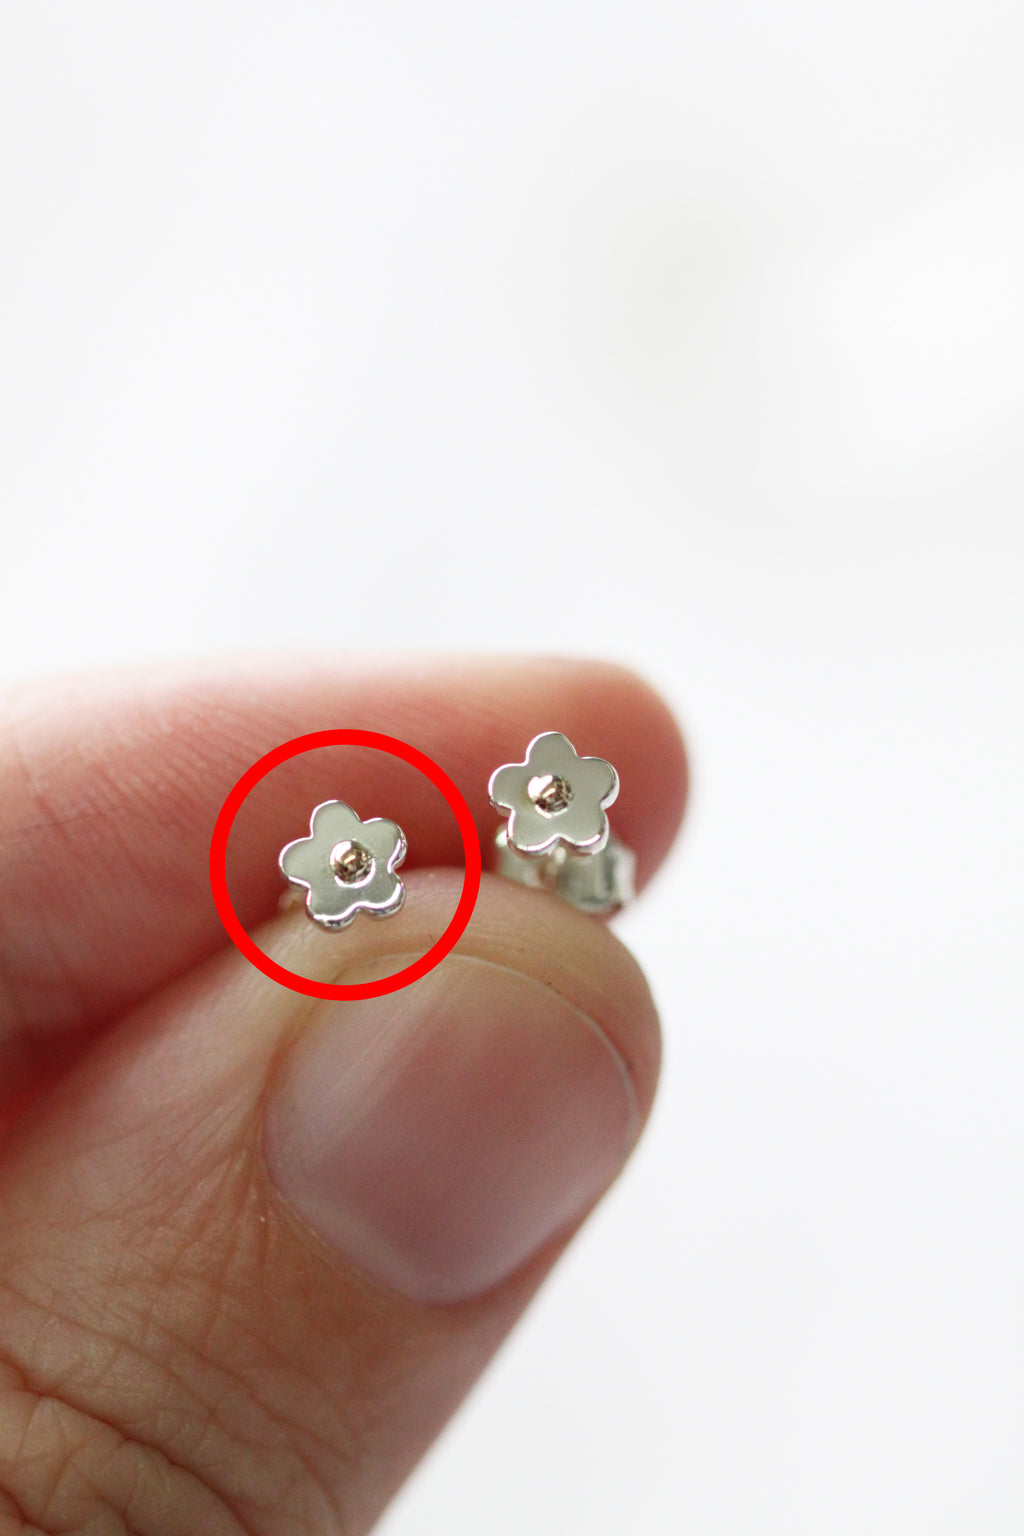 IMPERFECT - Mini daisy earrings // 2 tones